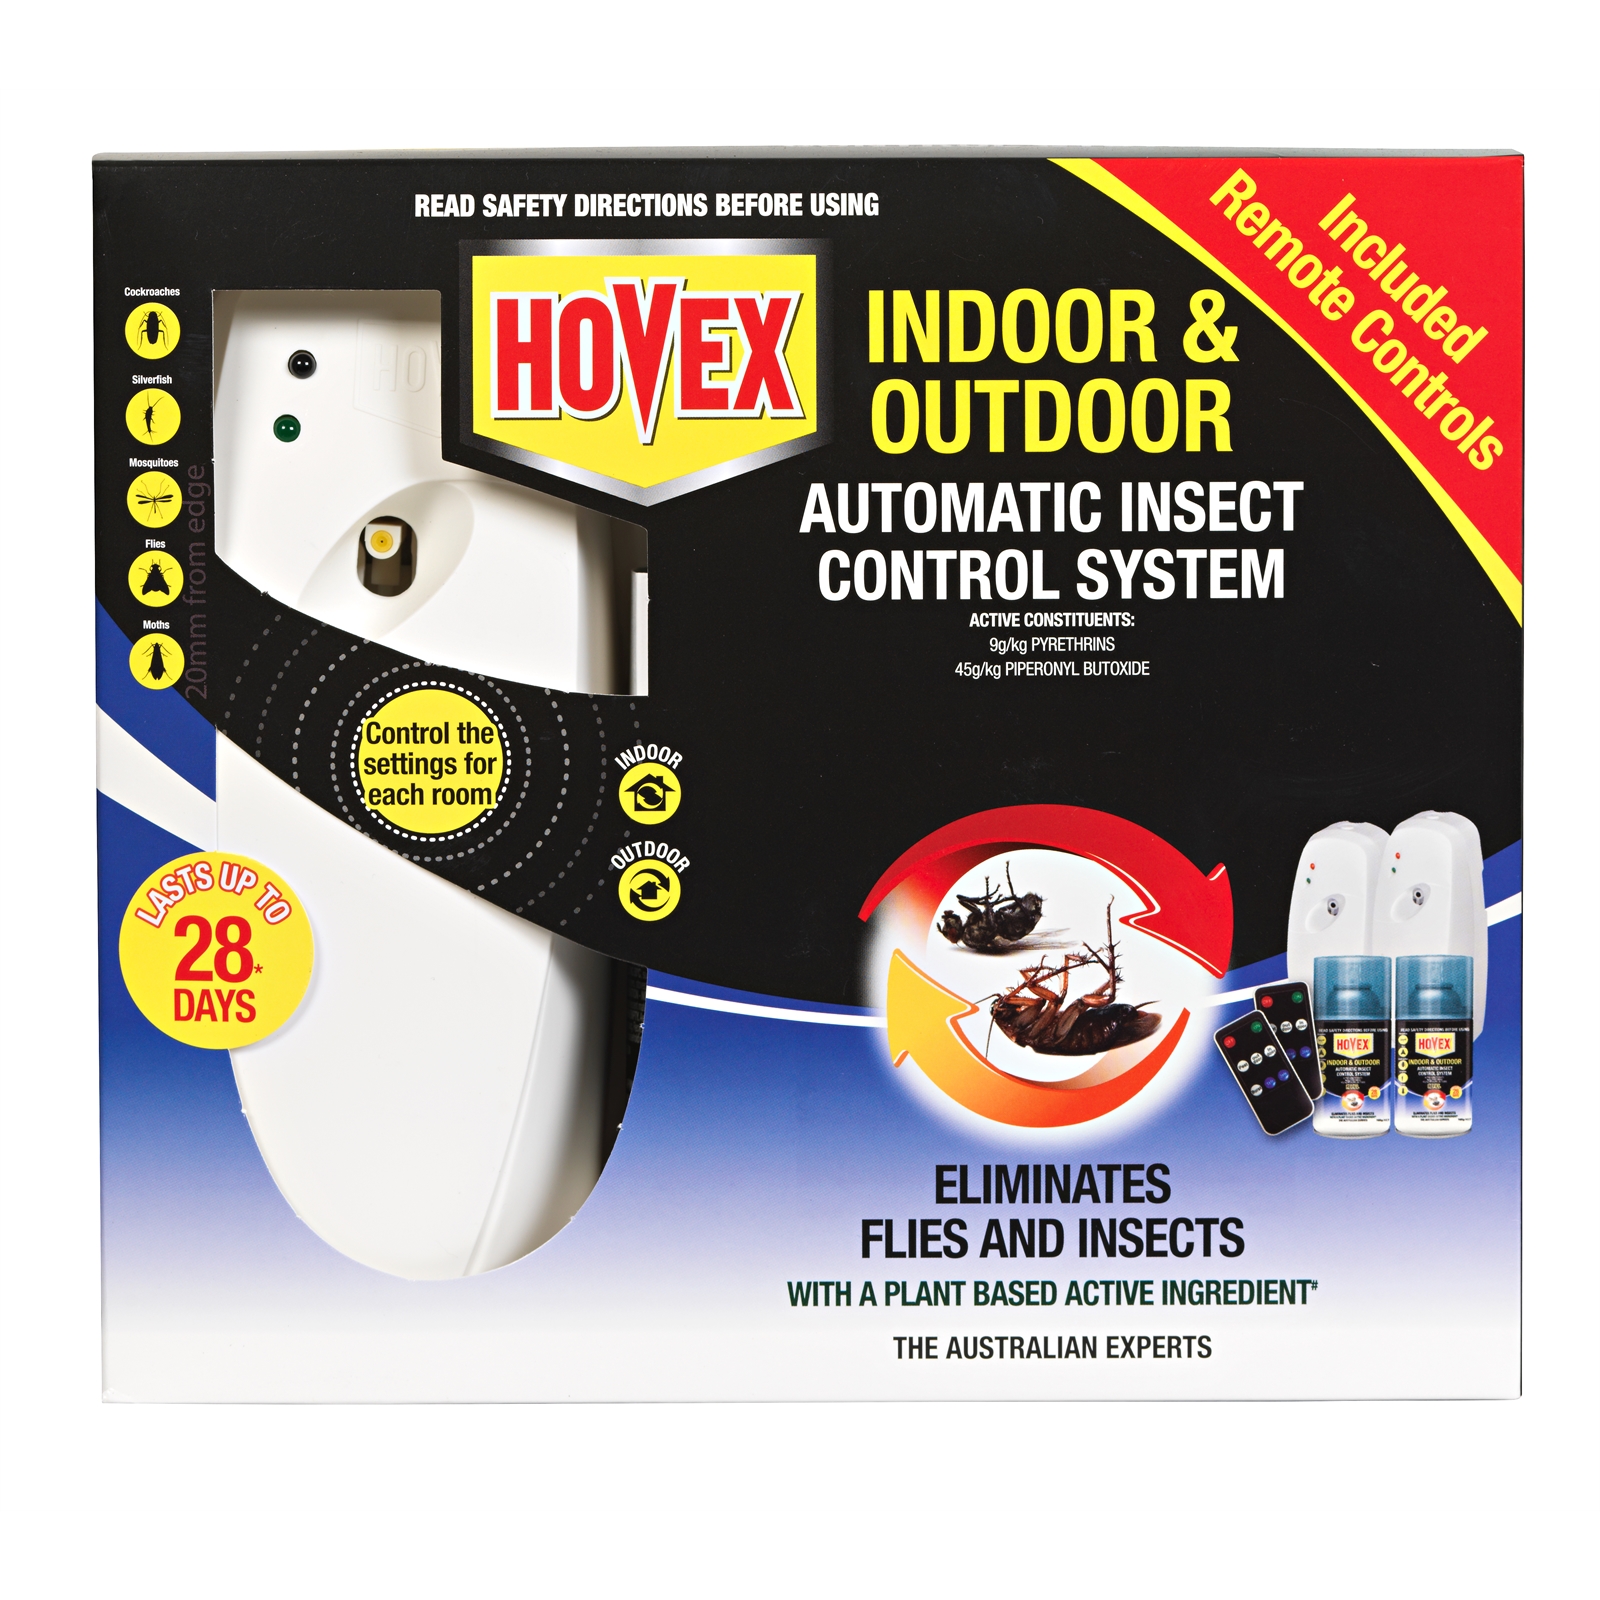 Hovex 2 in 1 Indoor and Outdoor Auto Control